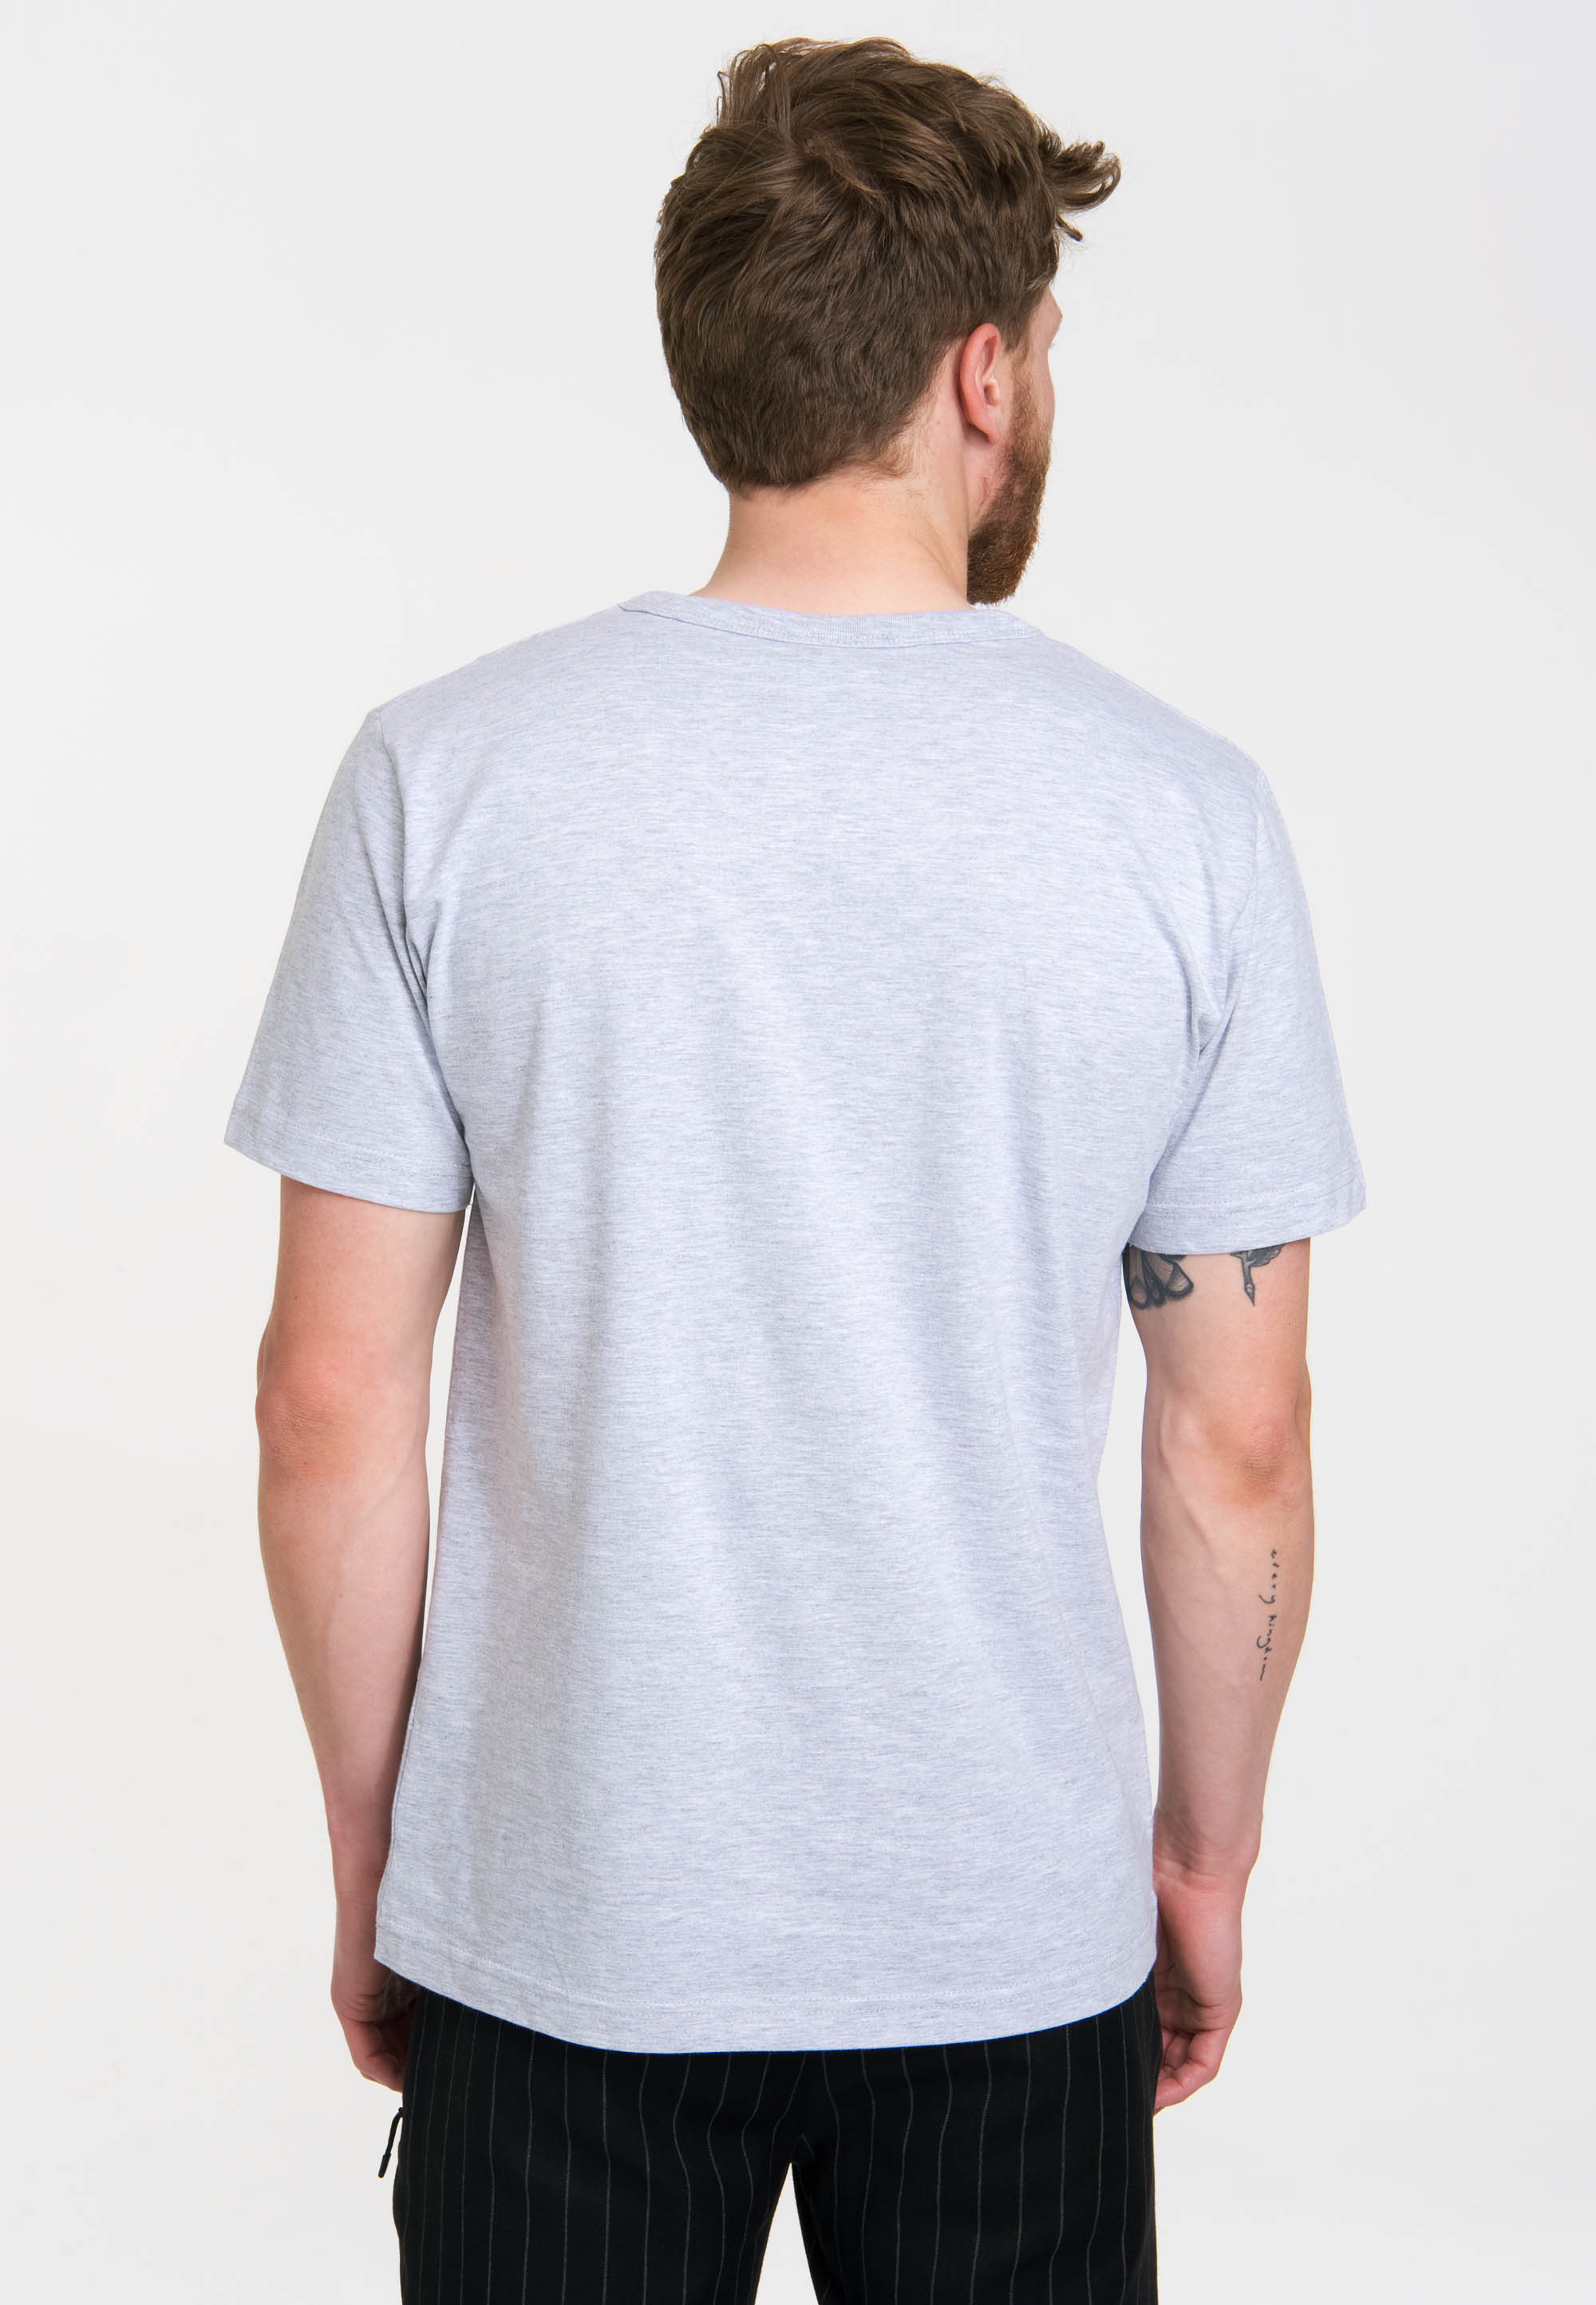 T-shirt 100% Portrait | Logoshirt® Gray) eBay cotton (Heather Asterix